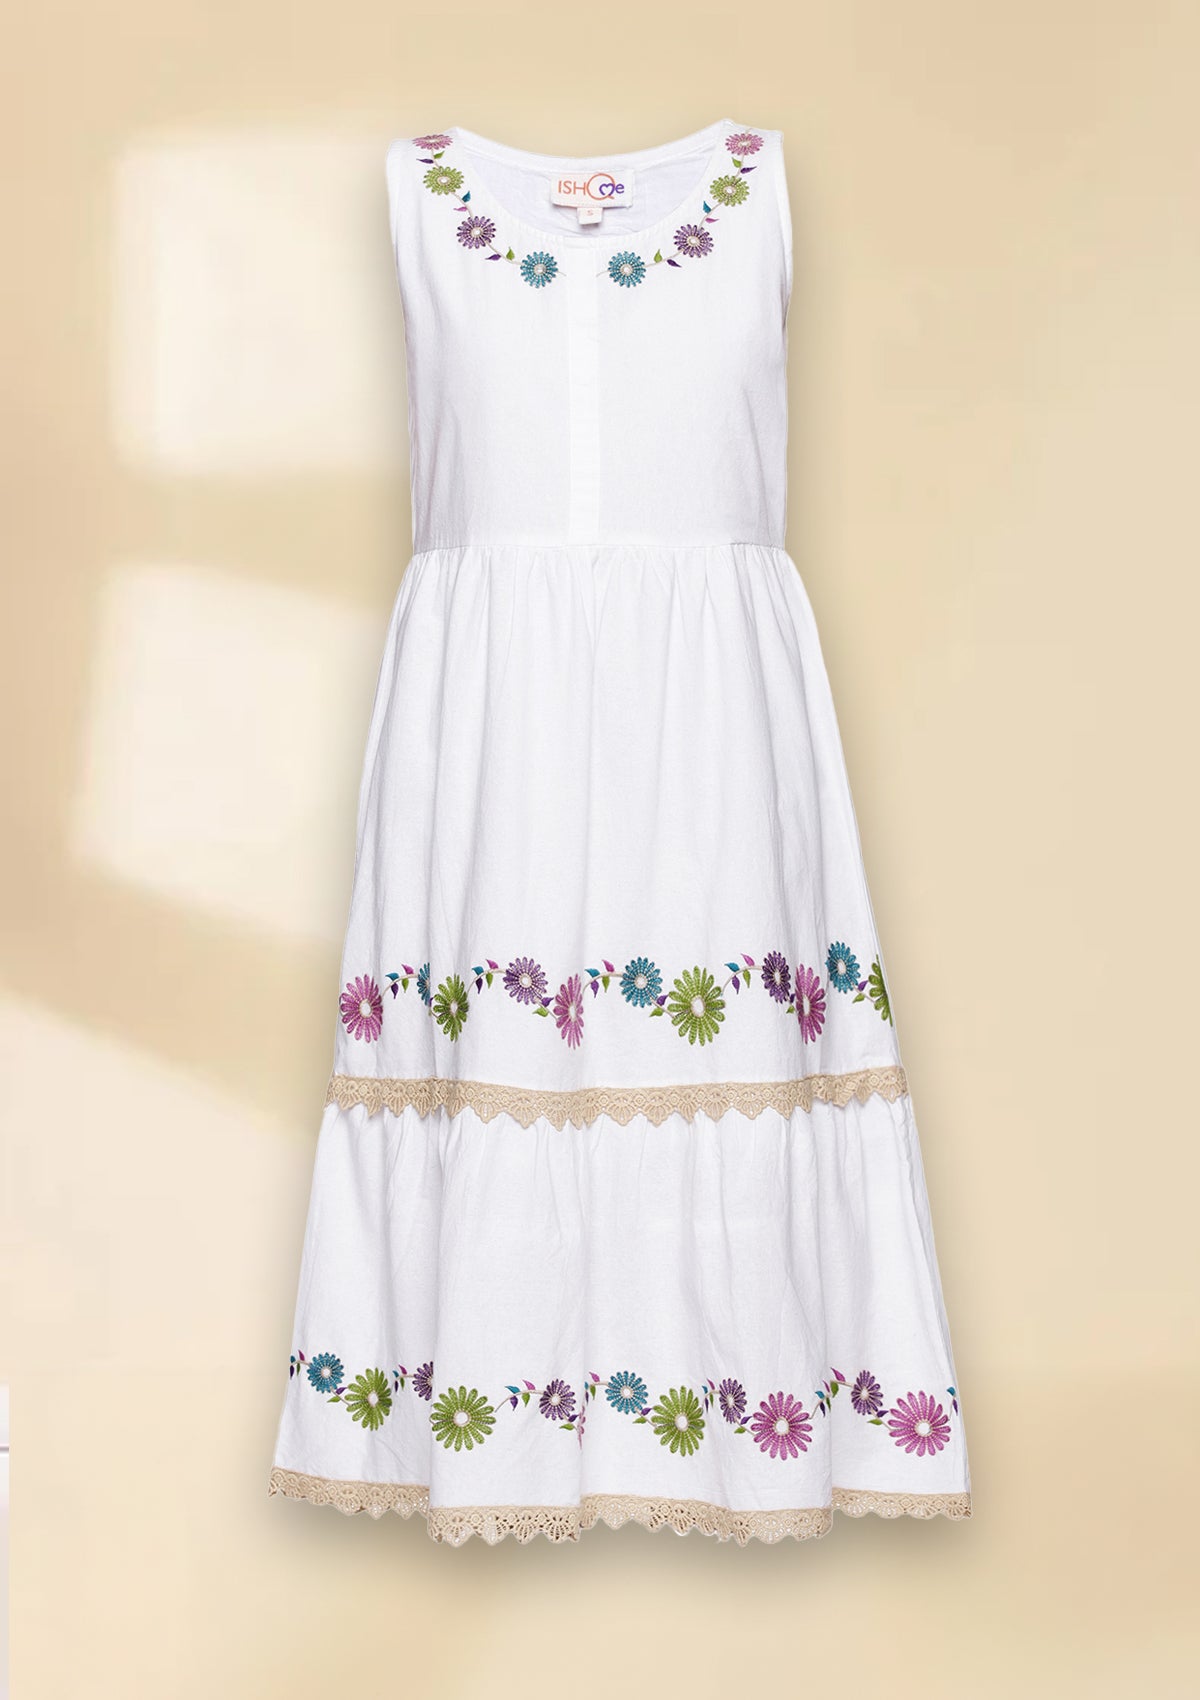 Angel Mist - Cotton Embroidered Tiered Dress - IshqMe